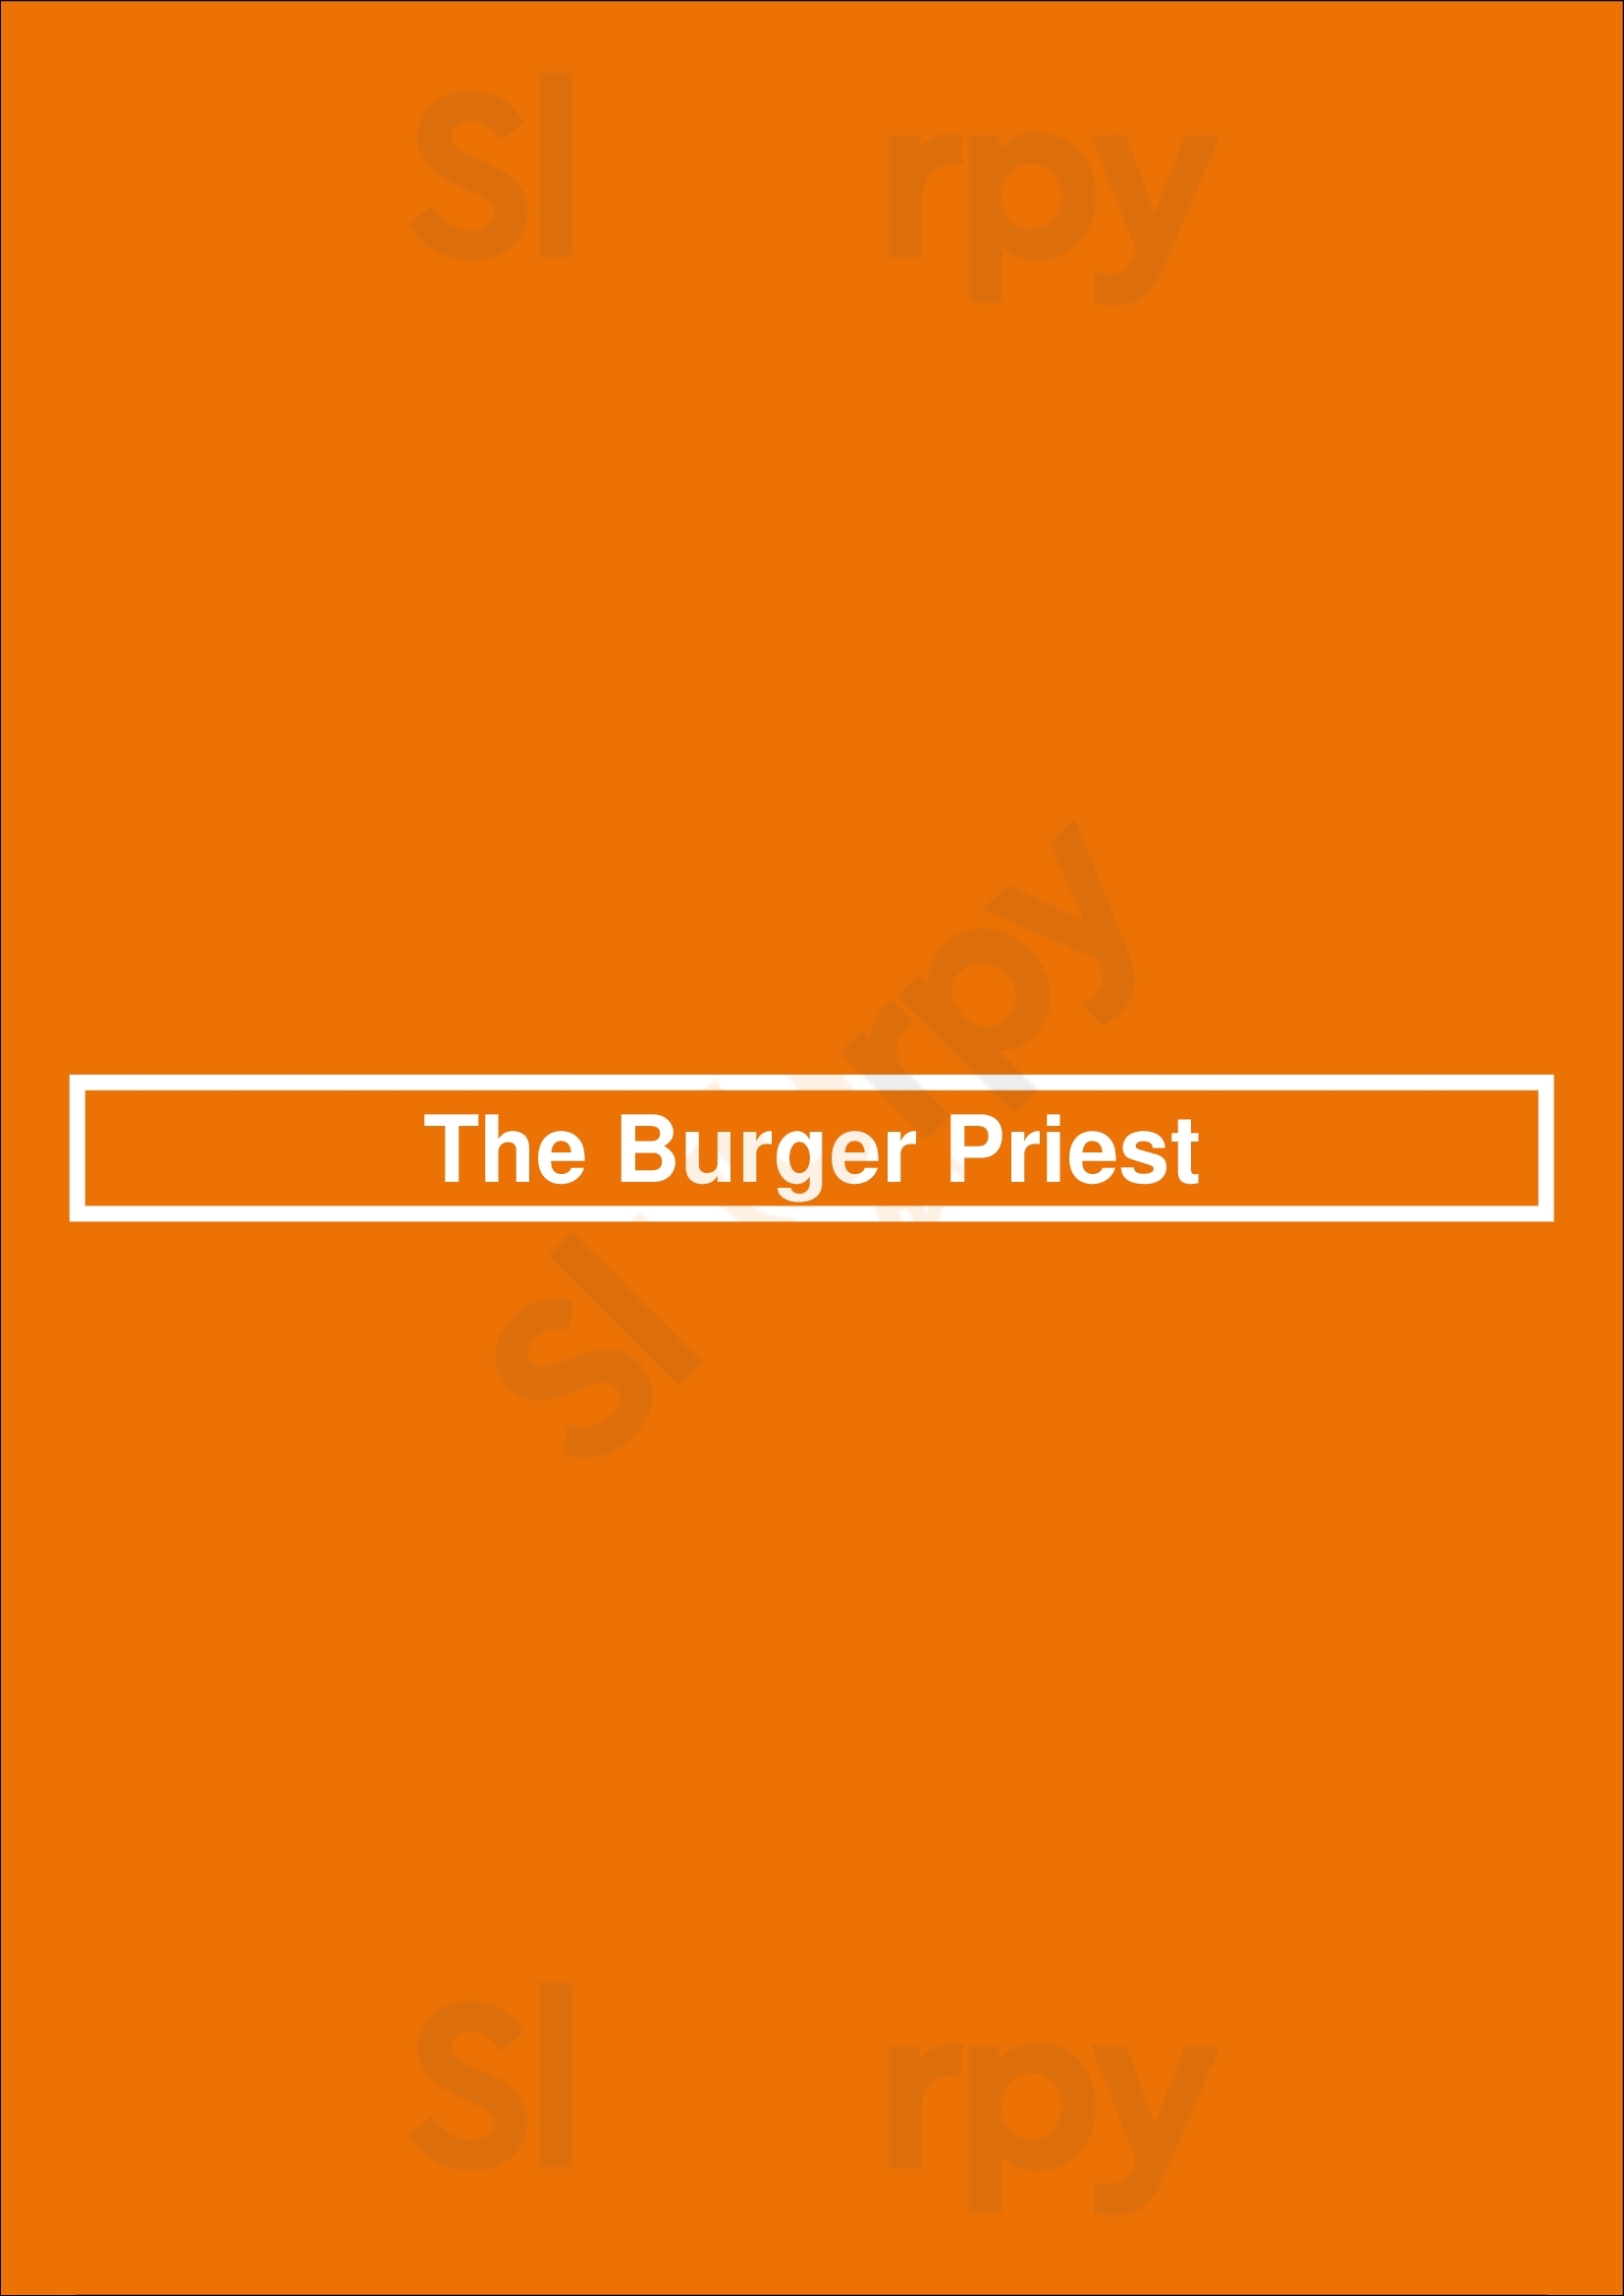 The Burger's Priest Mississauga Menu - 1